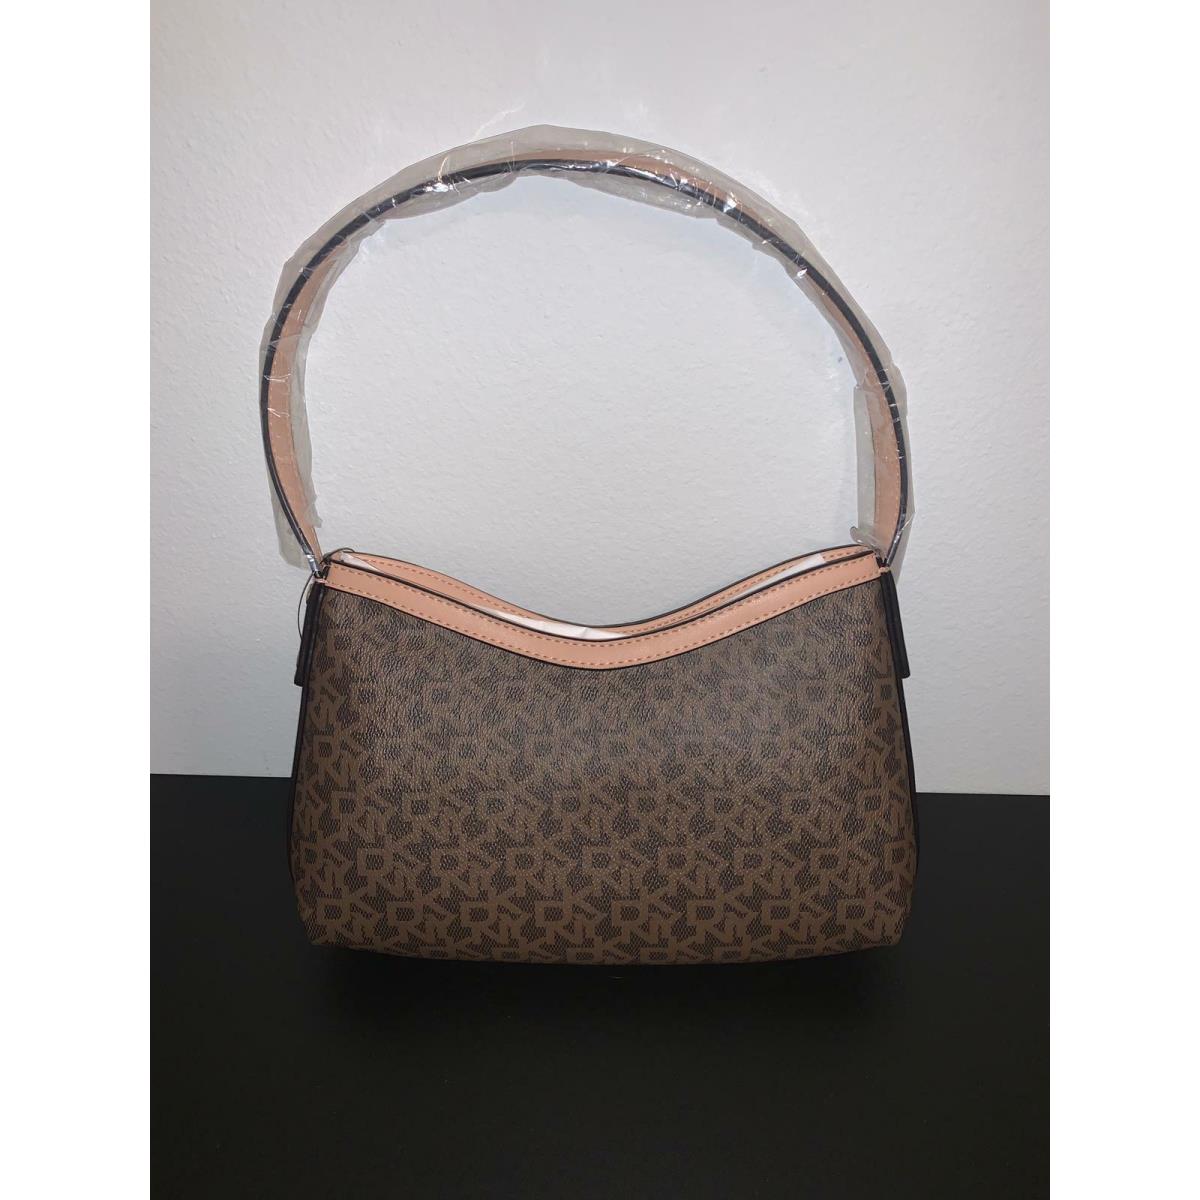 DKNY women's shoulder bag BROWN R83EJ655BRYANTD3E-3 | SHEIN USA